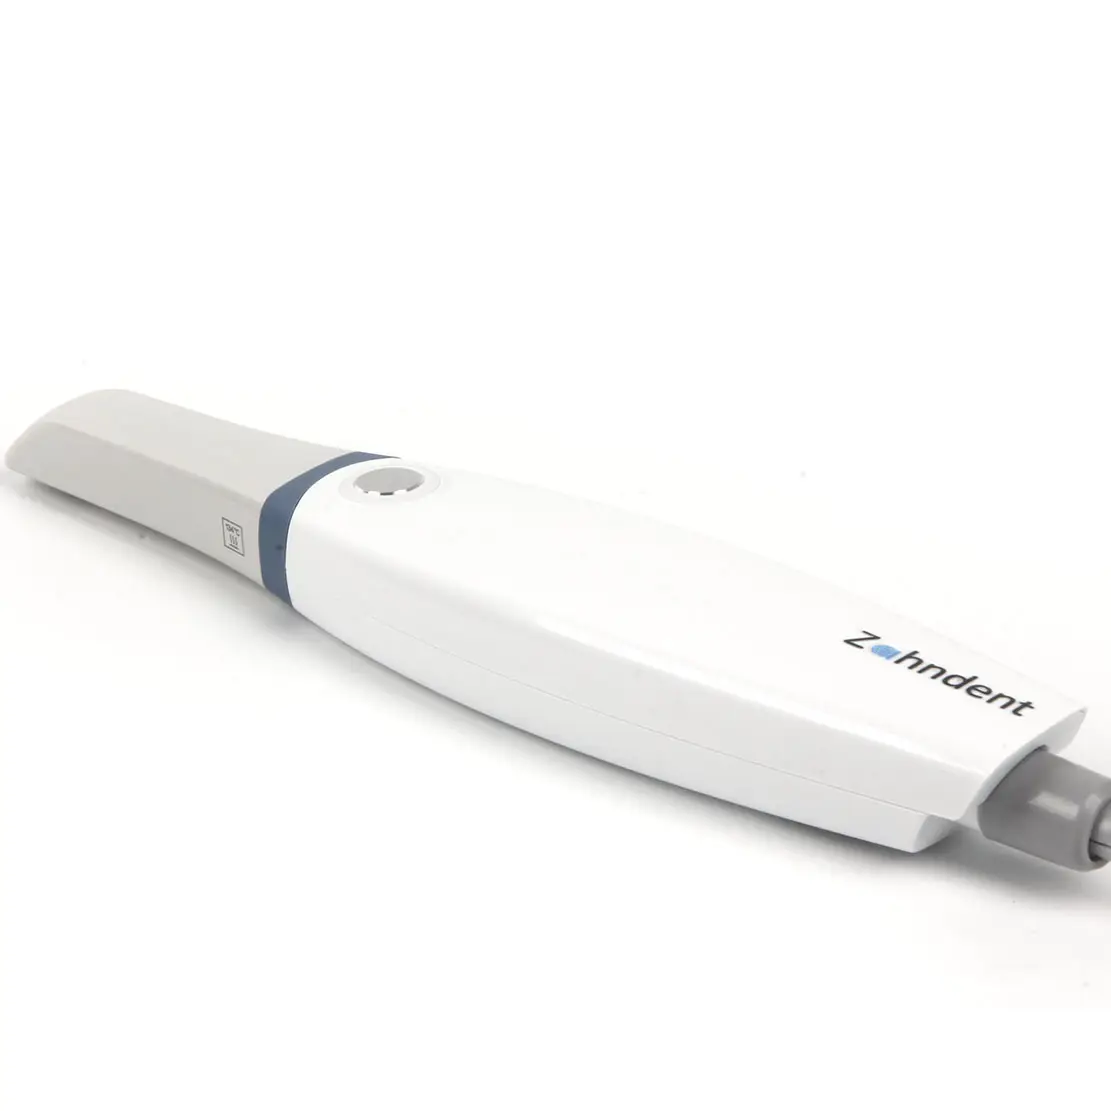 Zahndent 80 mm/s velocità di scansione apparecchiature di imaging dentale scanner intraorale per la clinica dentale